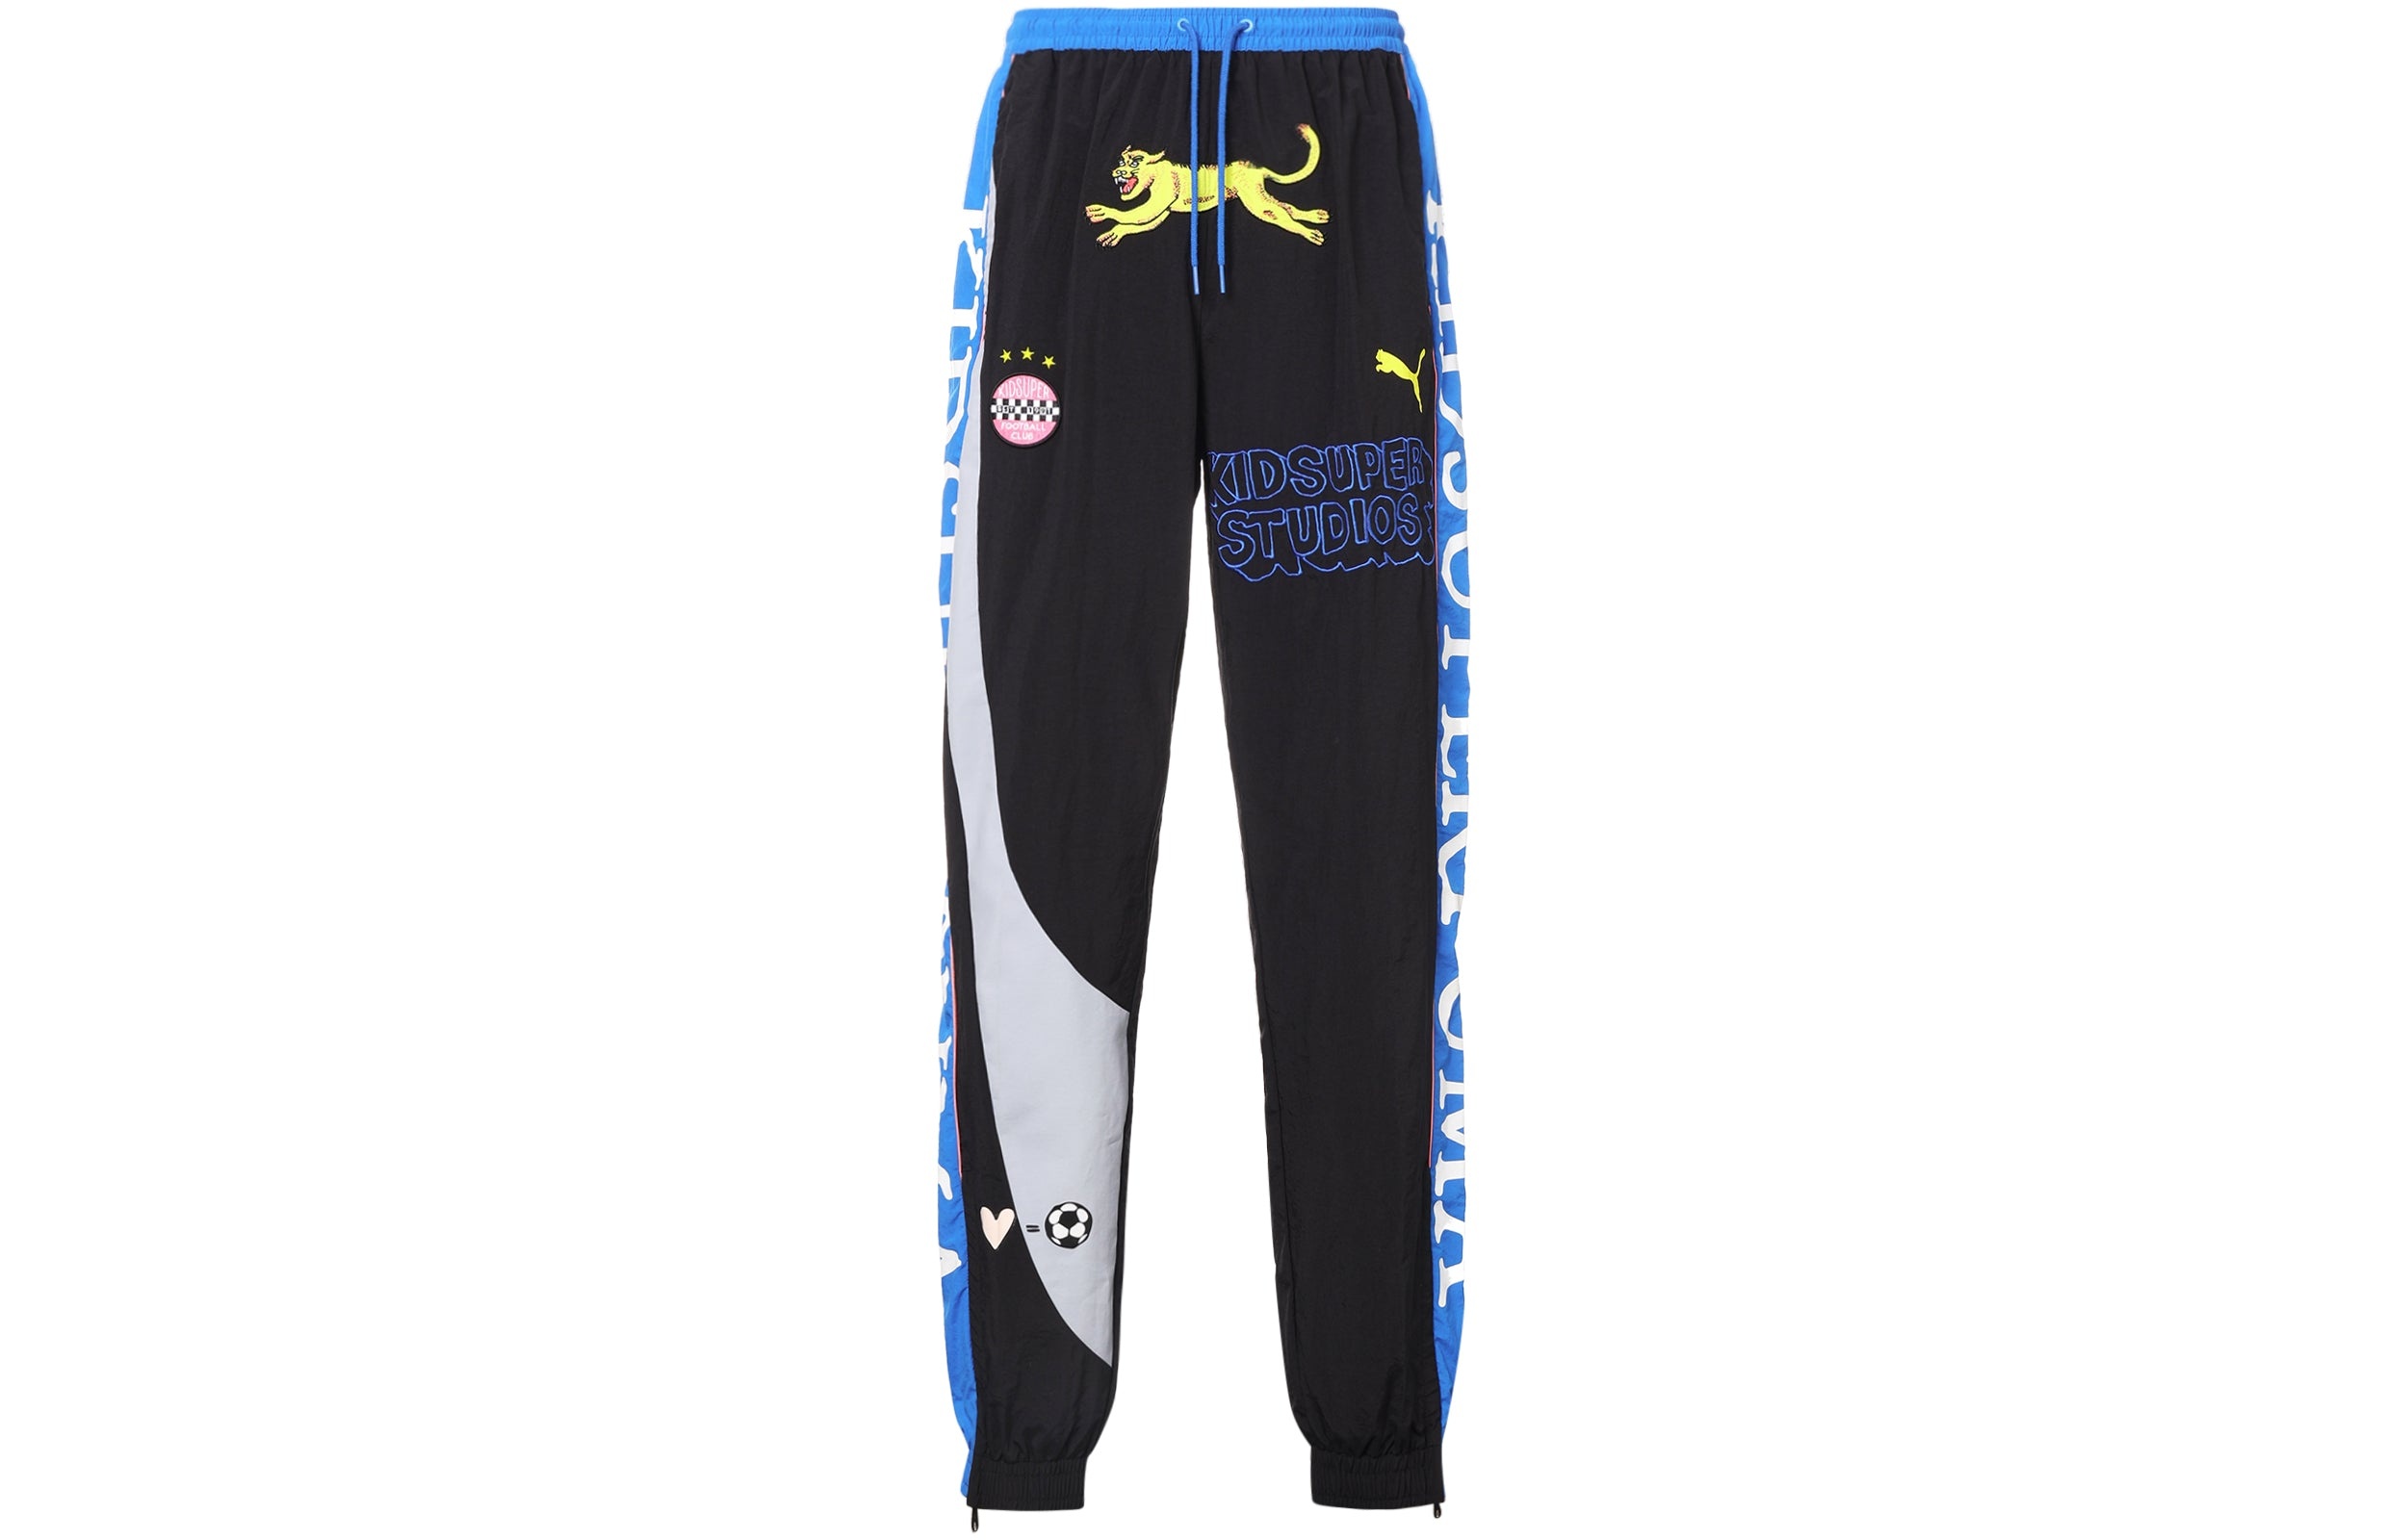 PUMA x KS Jointly Signed Track Pants Sports Long Pant Male Black 598462-01 - 1